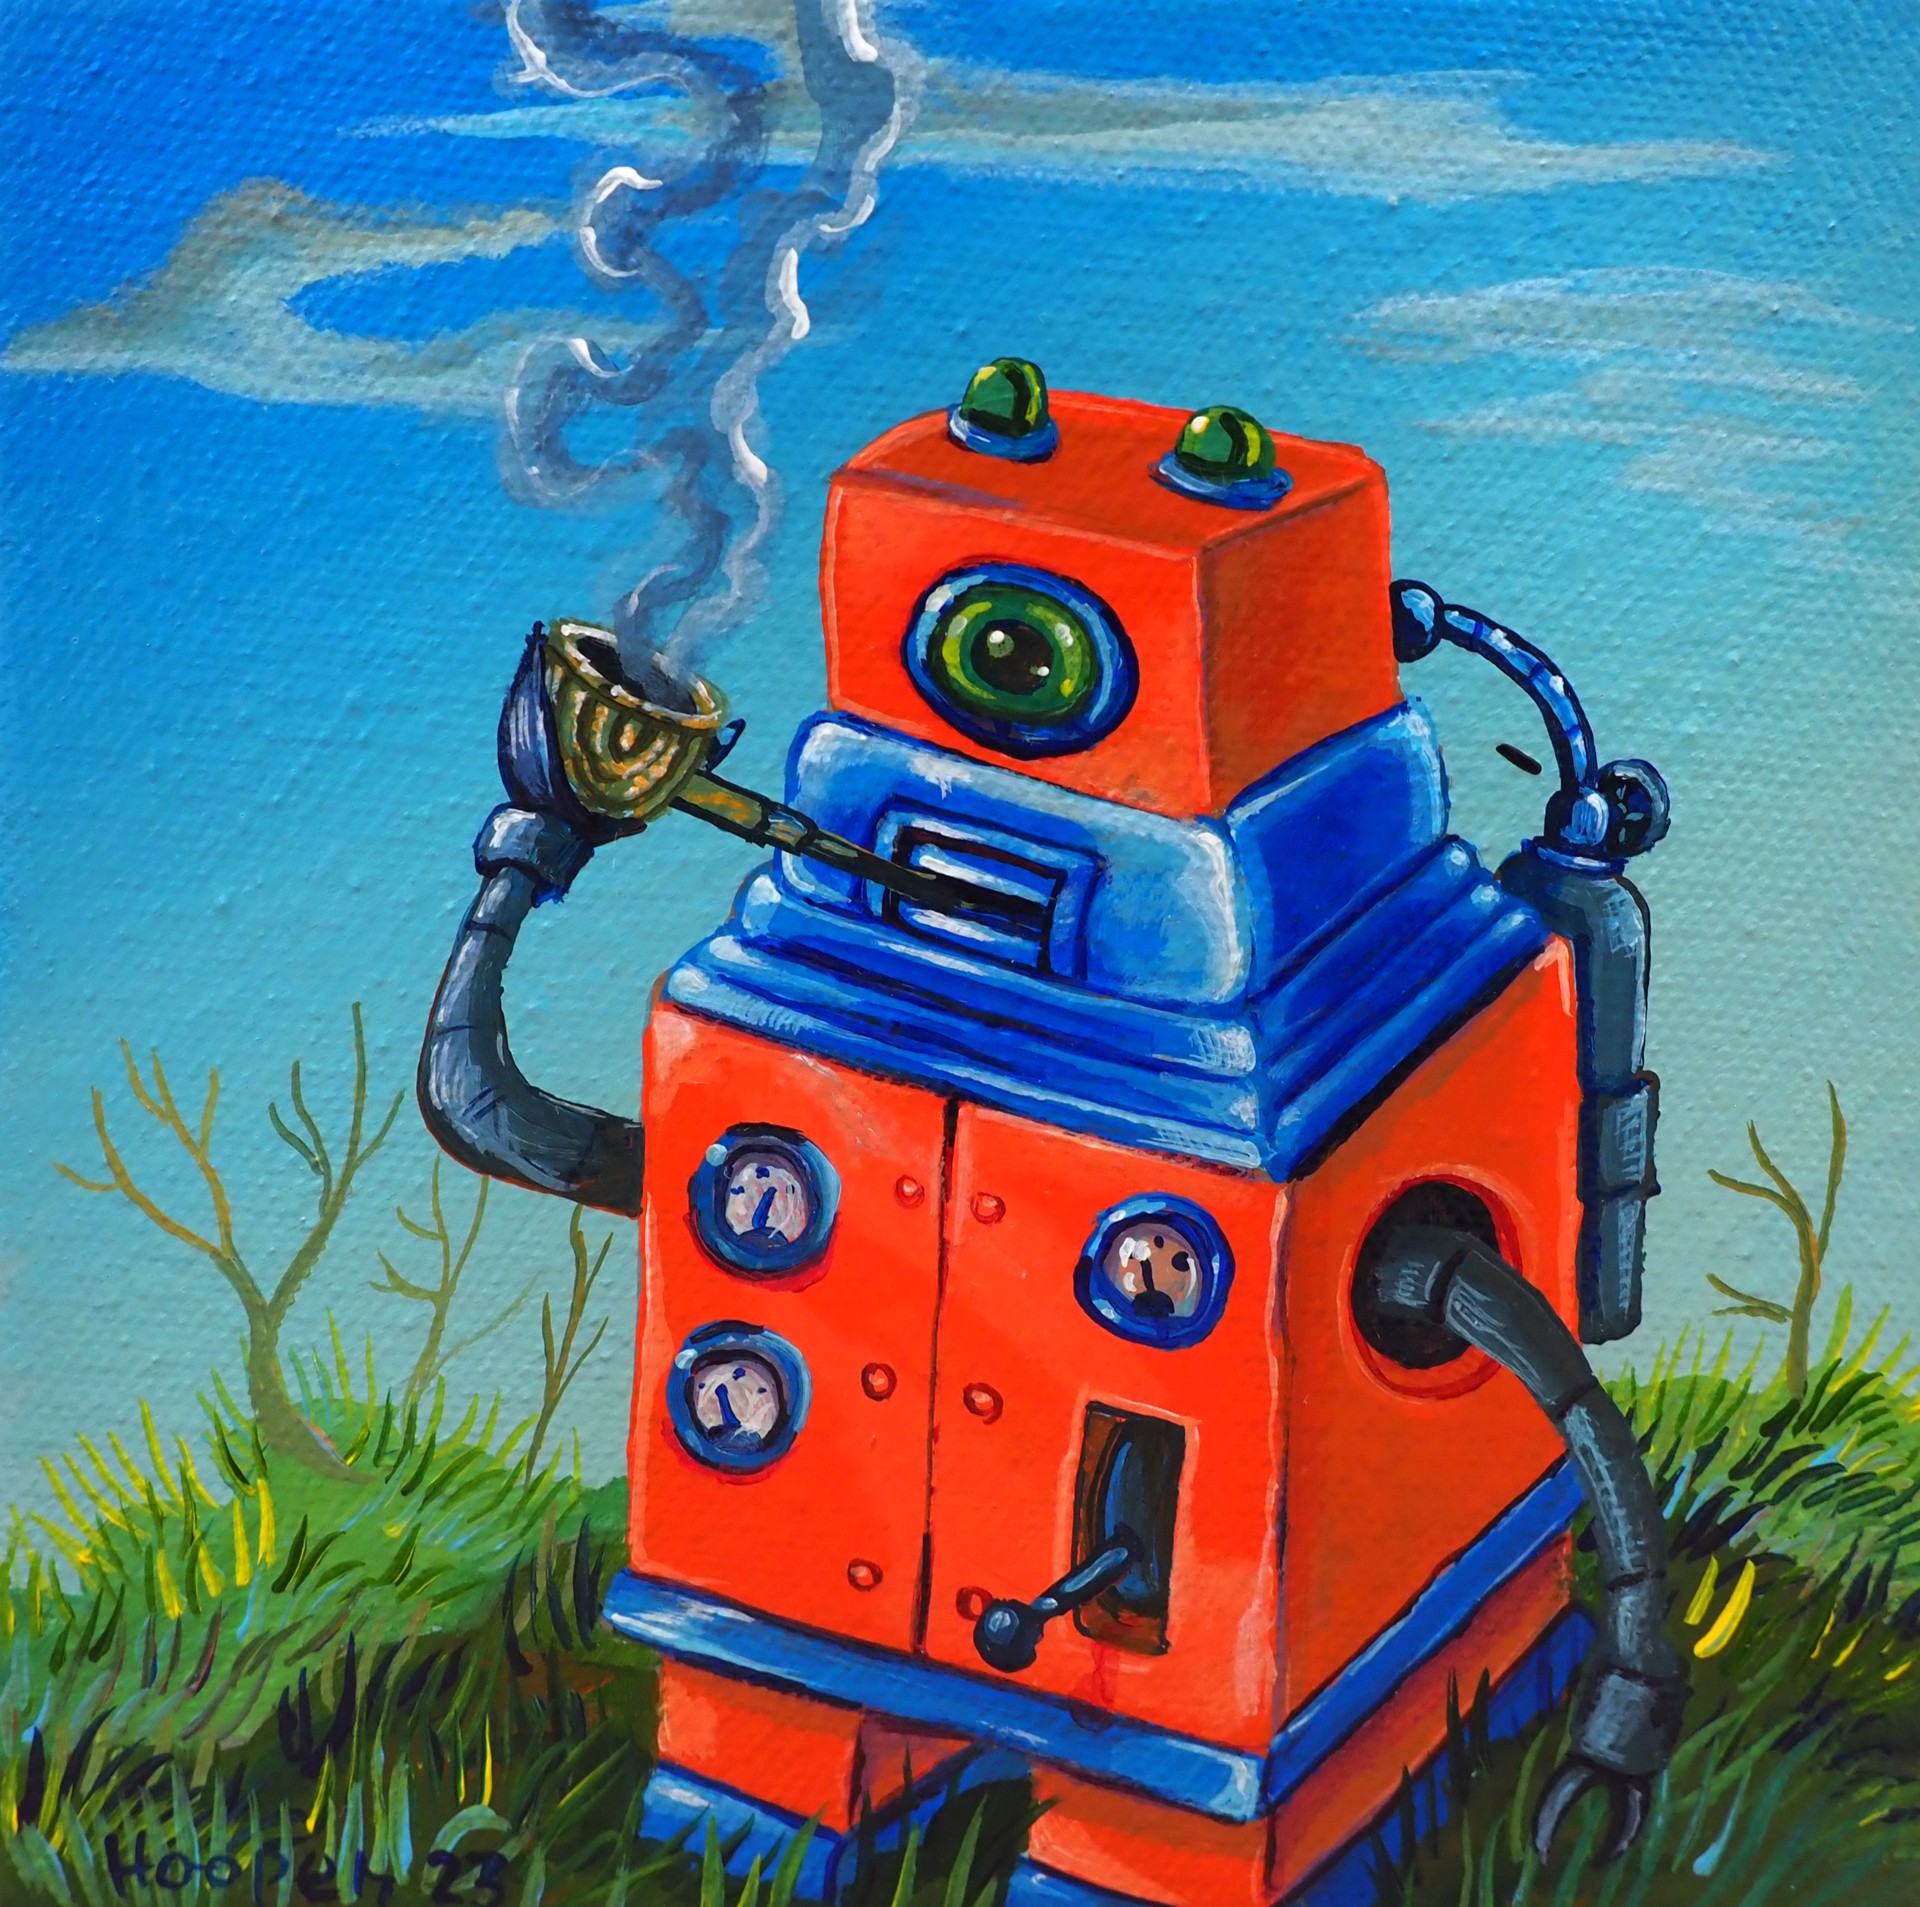 Pipe Smokin' Robot by Tim Hooper